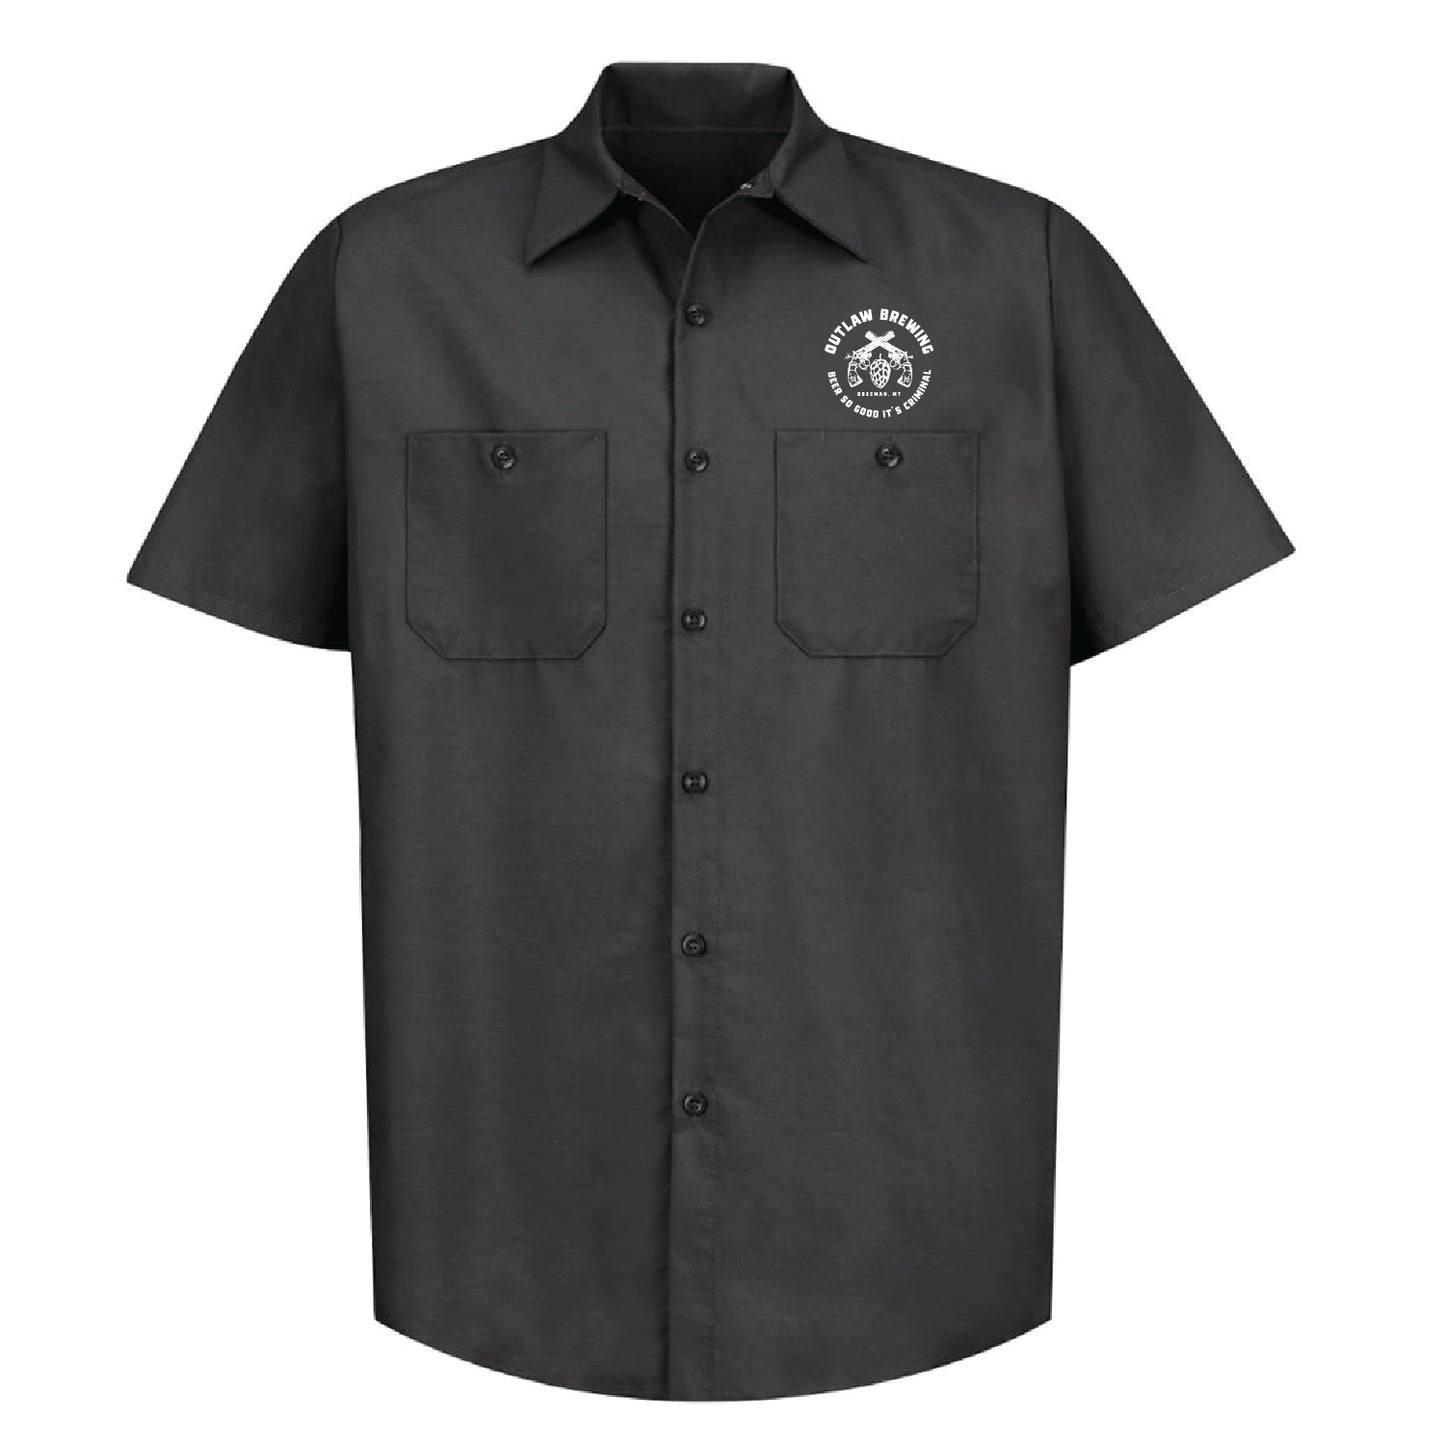 Outlaw Brewing Industrial Short Sleeve Work Shirt